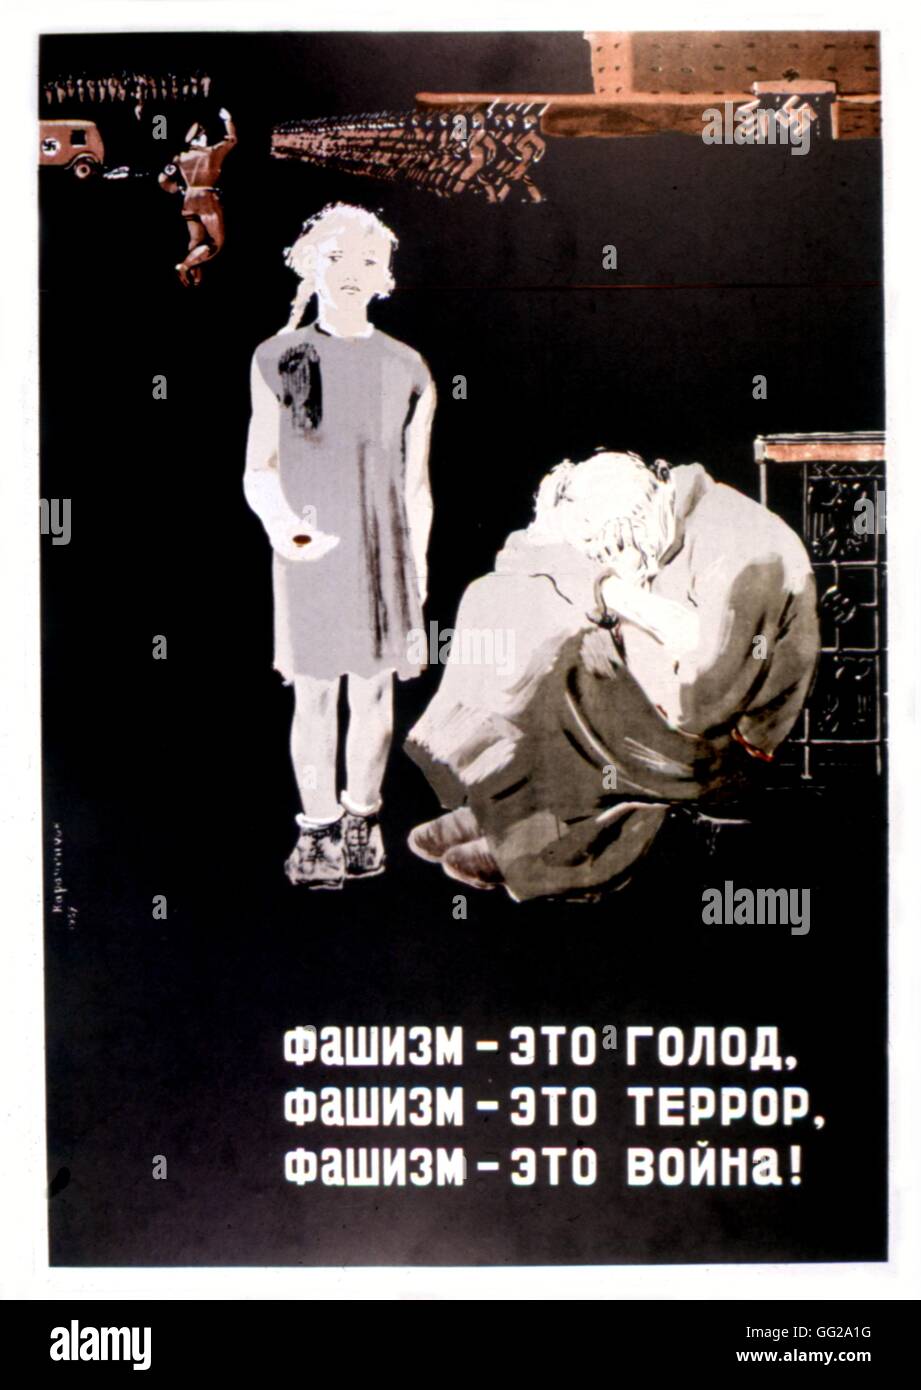 Propaganda poster by V. Karatchentsov. 'Fascism means terror, starvation and war' 1937 U.S.S.R. Stock Photo